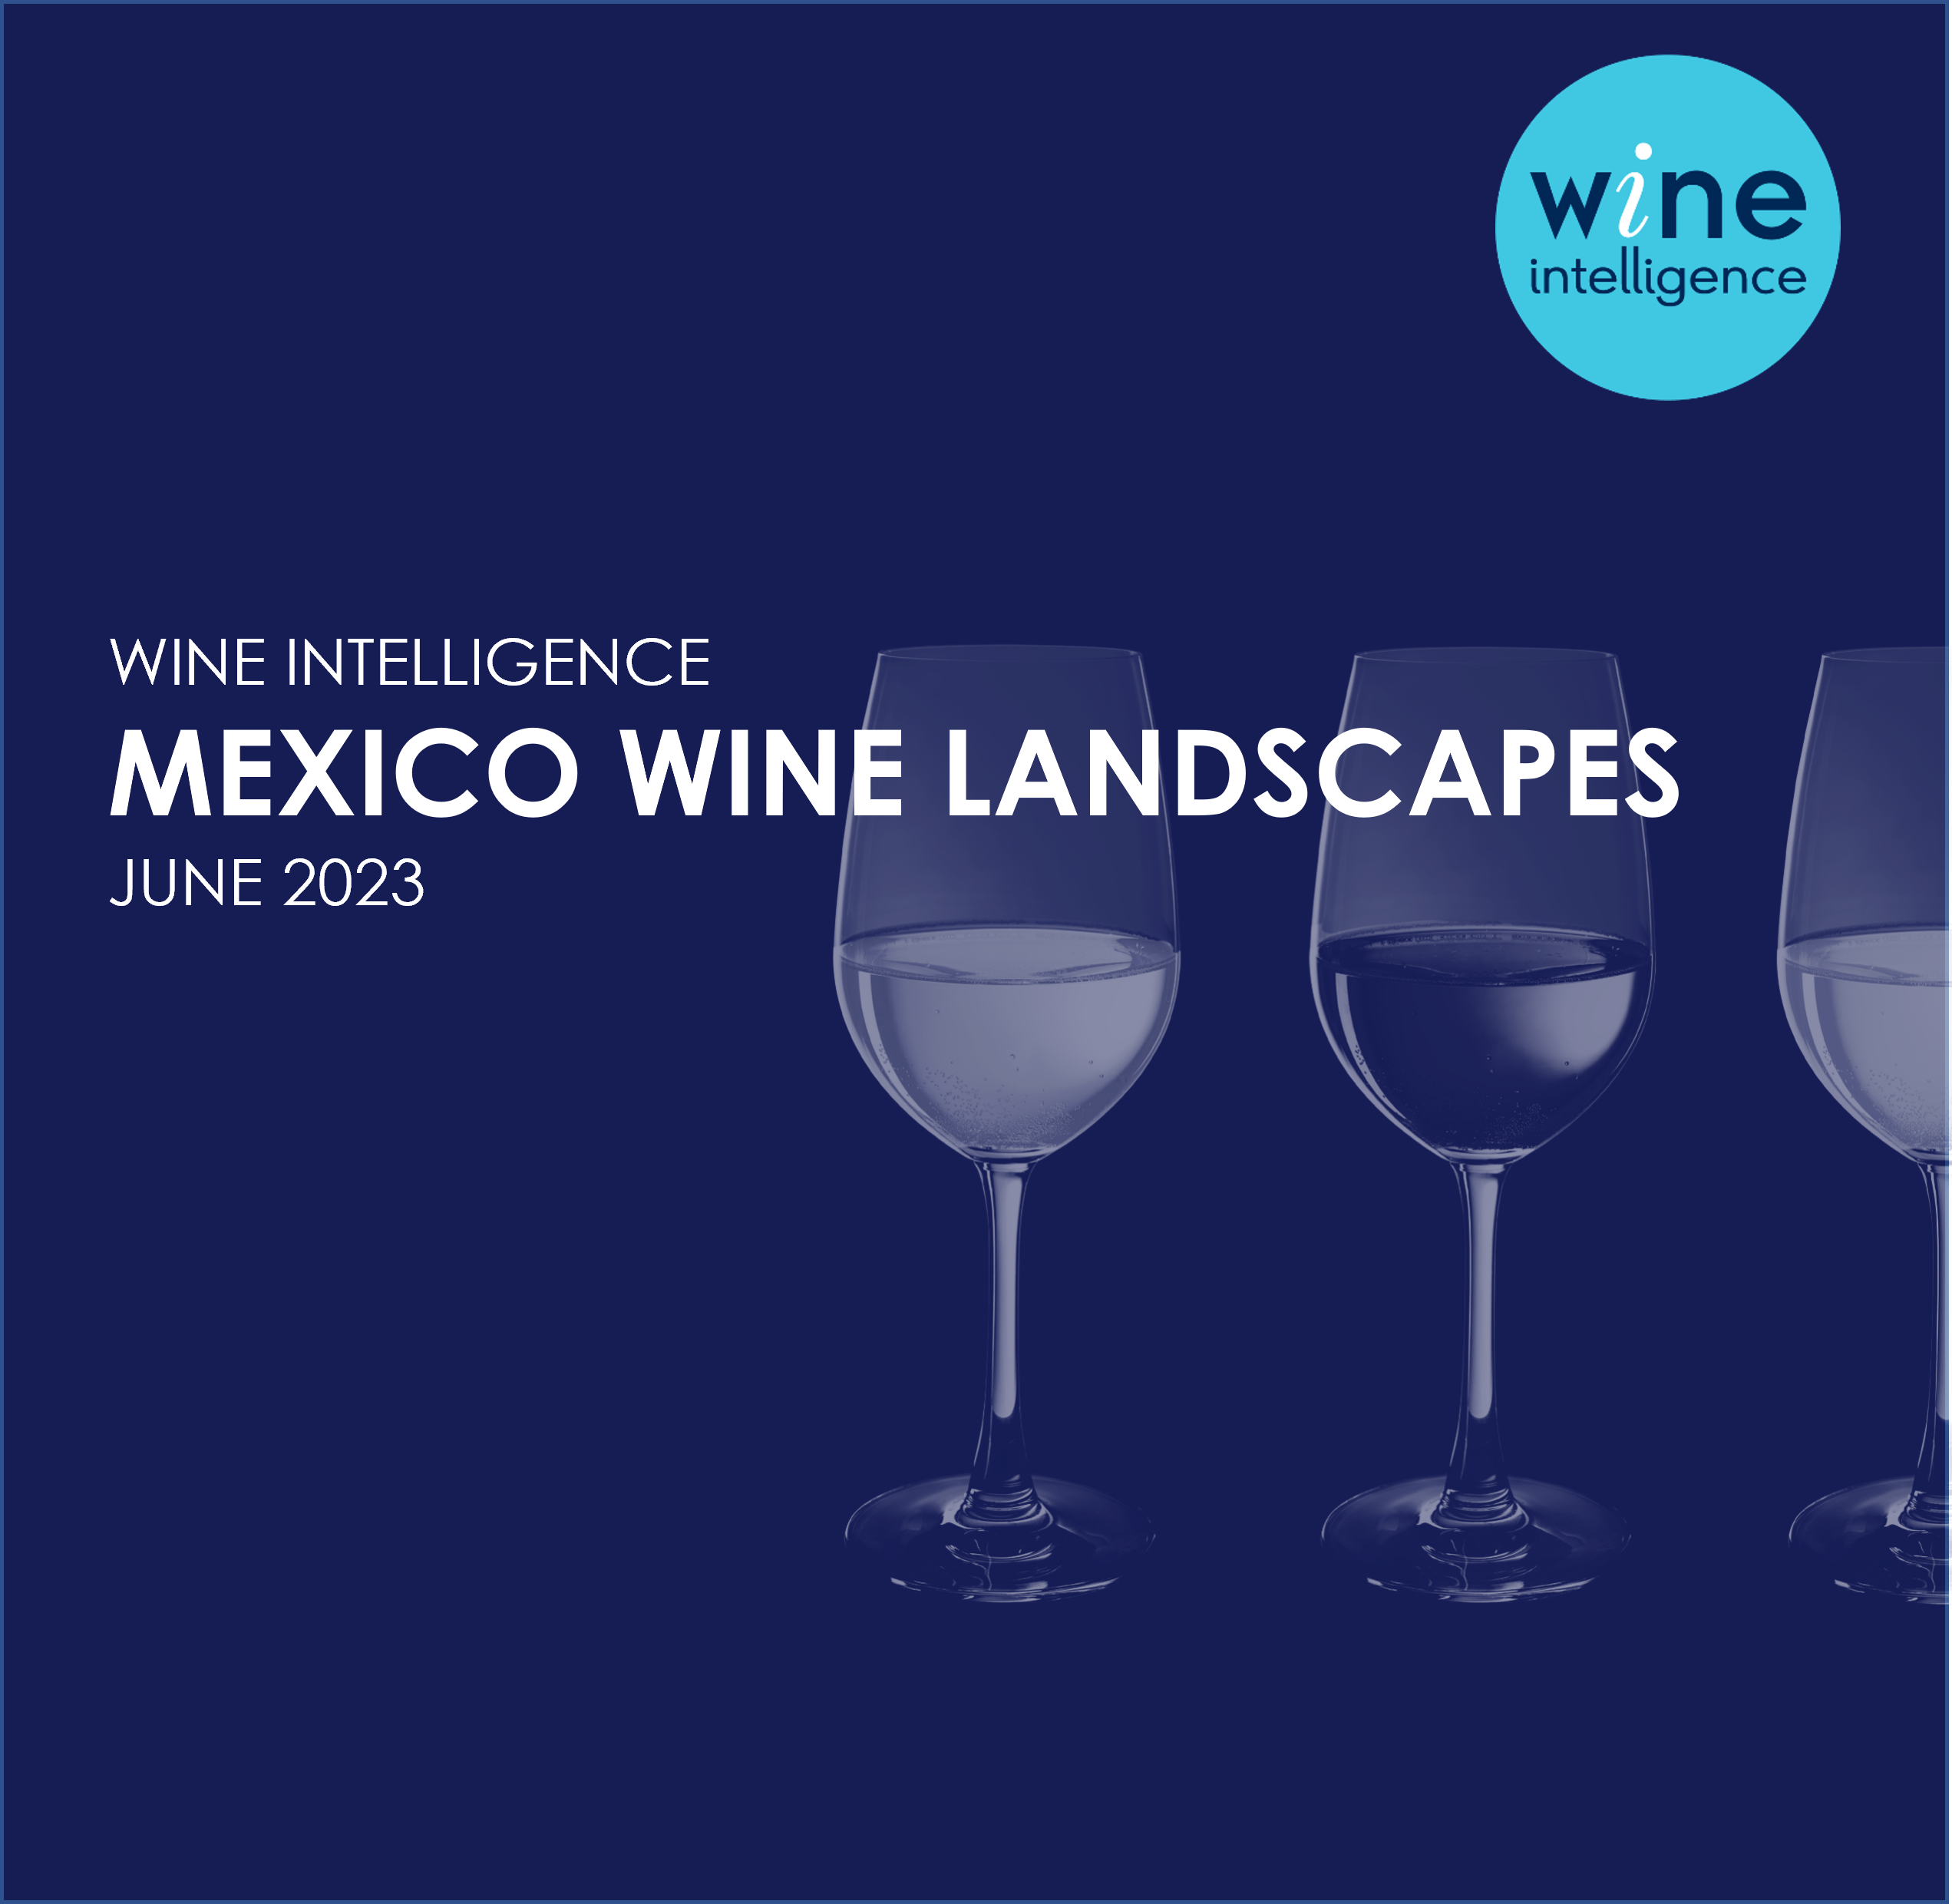 Mexico Wine Landscapes thumbnail 2023 - US Wine Landscapes Report 2023